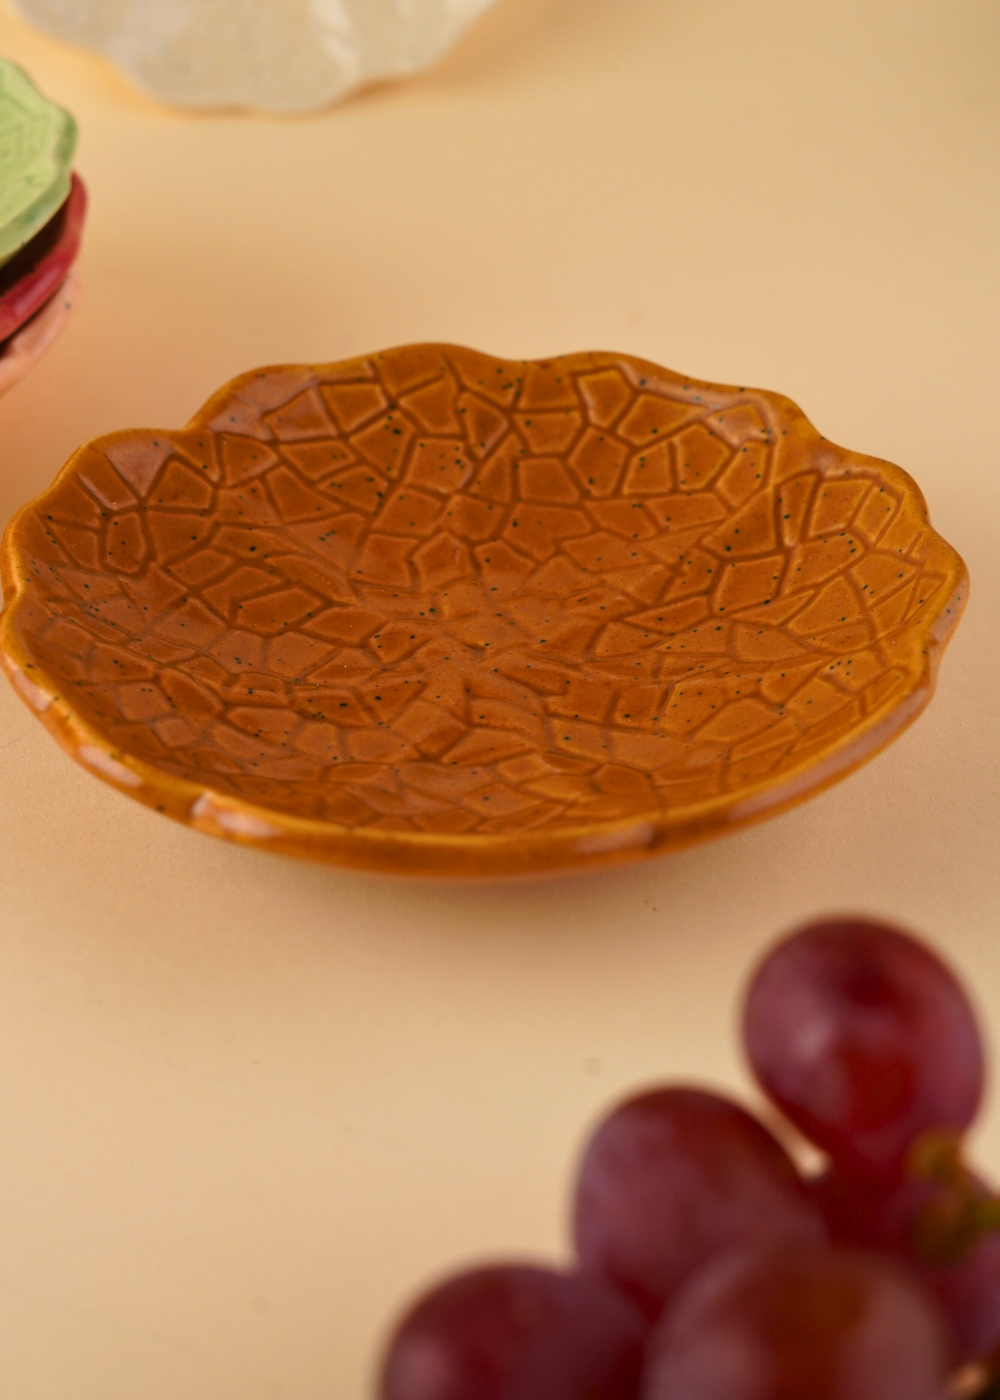 rust cabbage handmade dessert plate made by ceramic